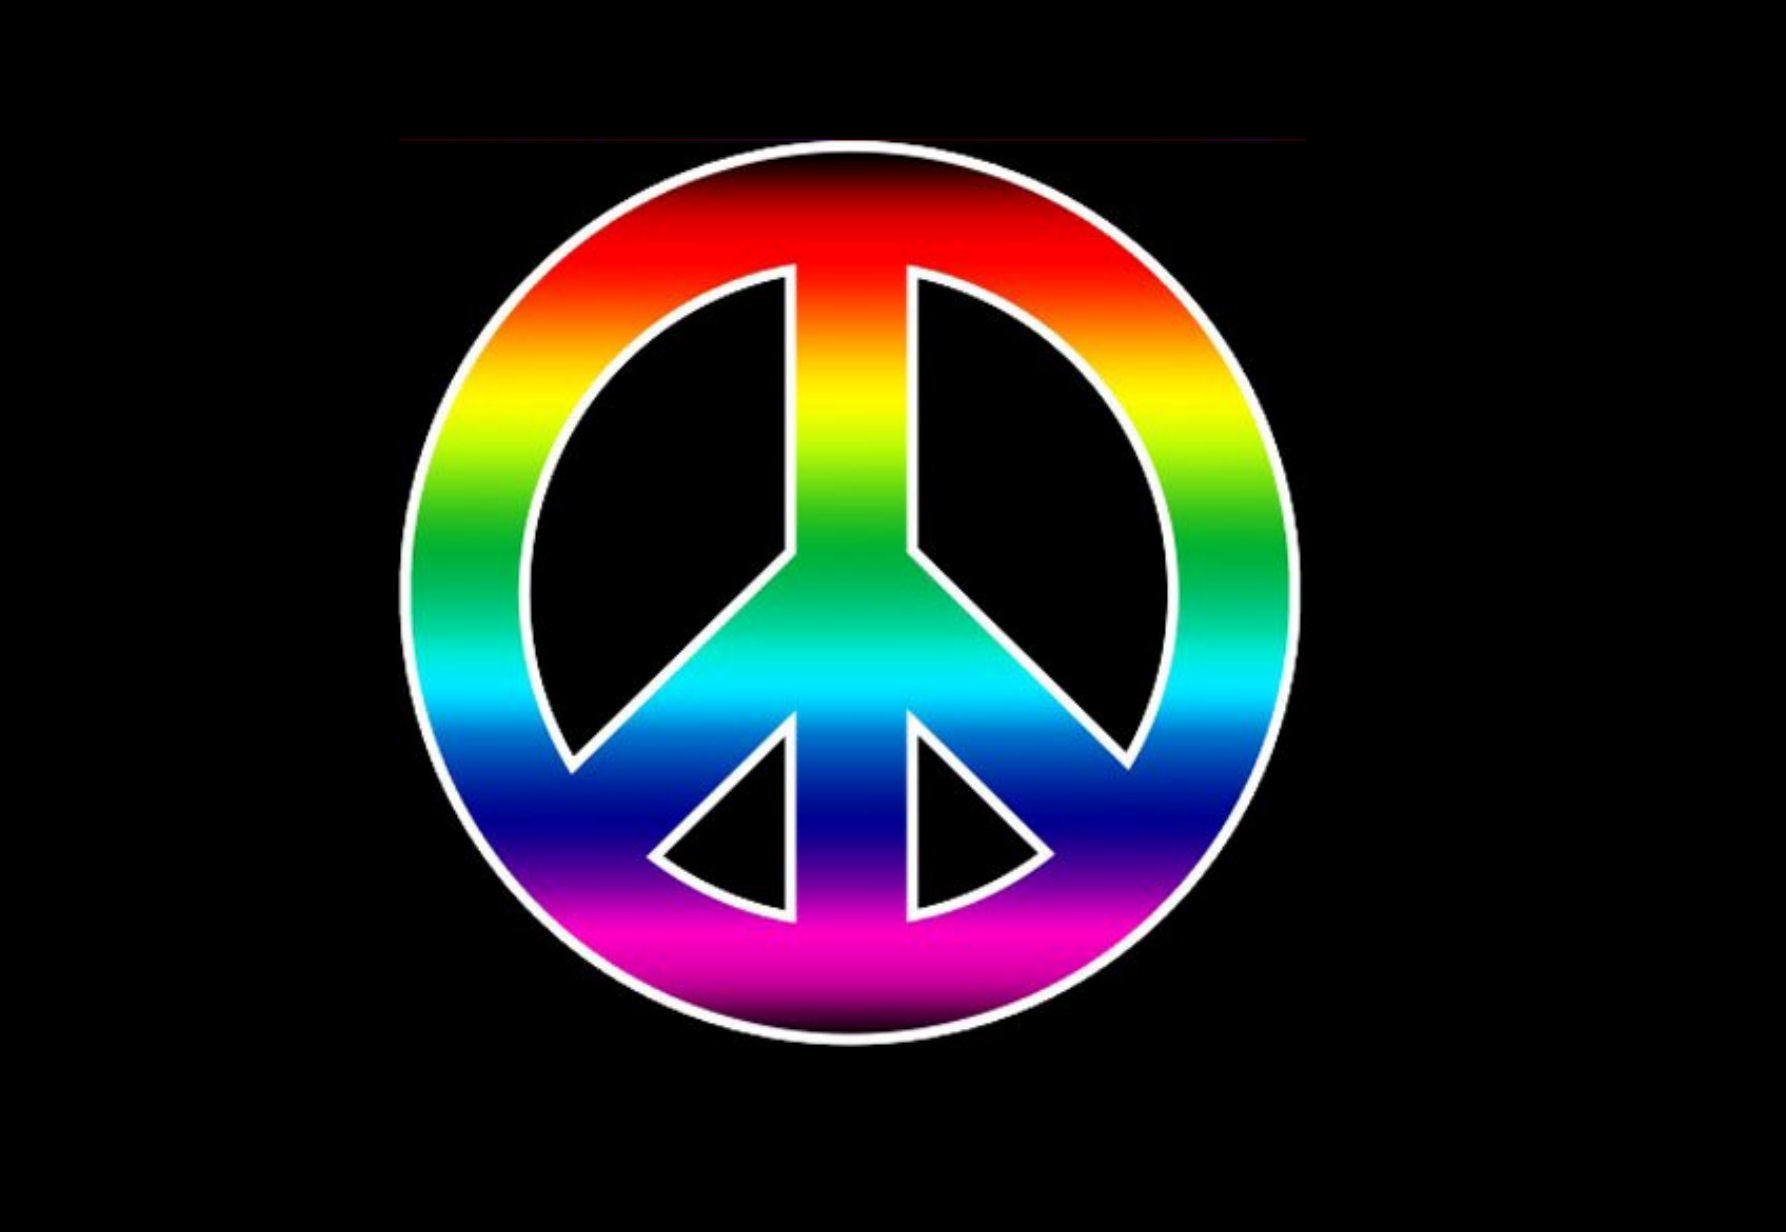 Peace Sign Desktop Backgrounds - WallpaperSafari